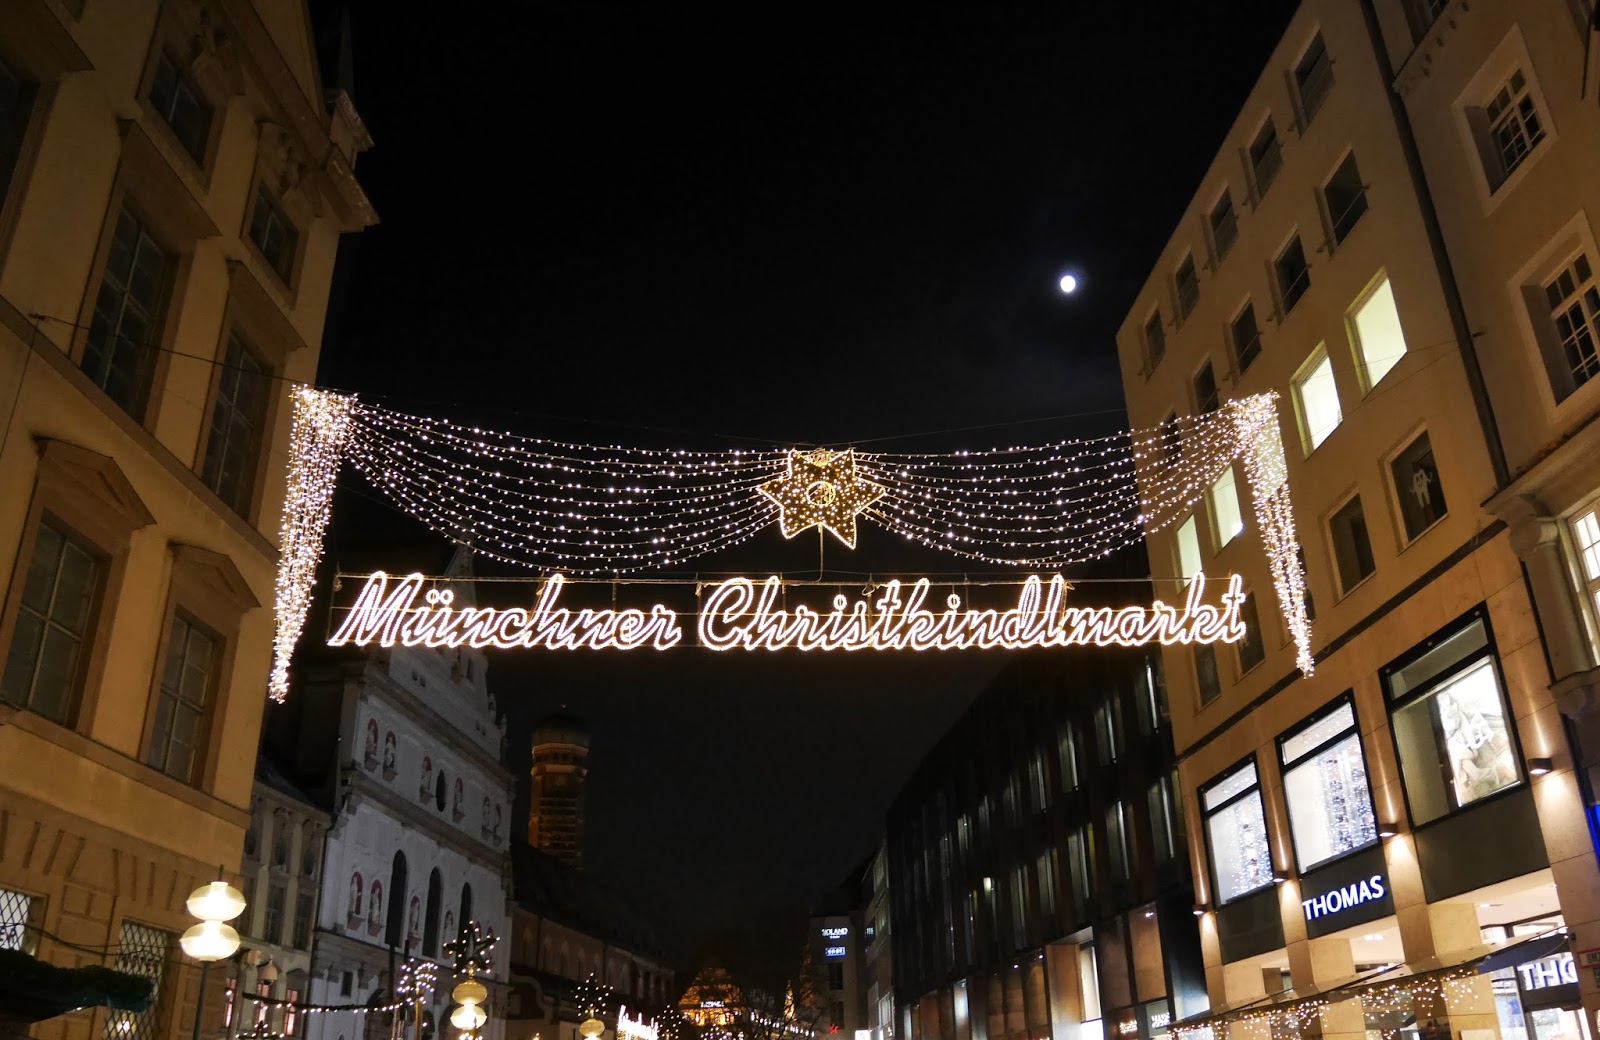 Munich Christmas Market sign